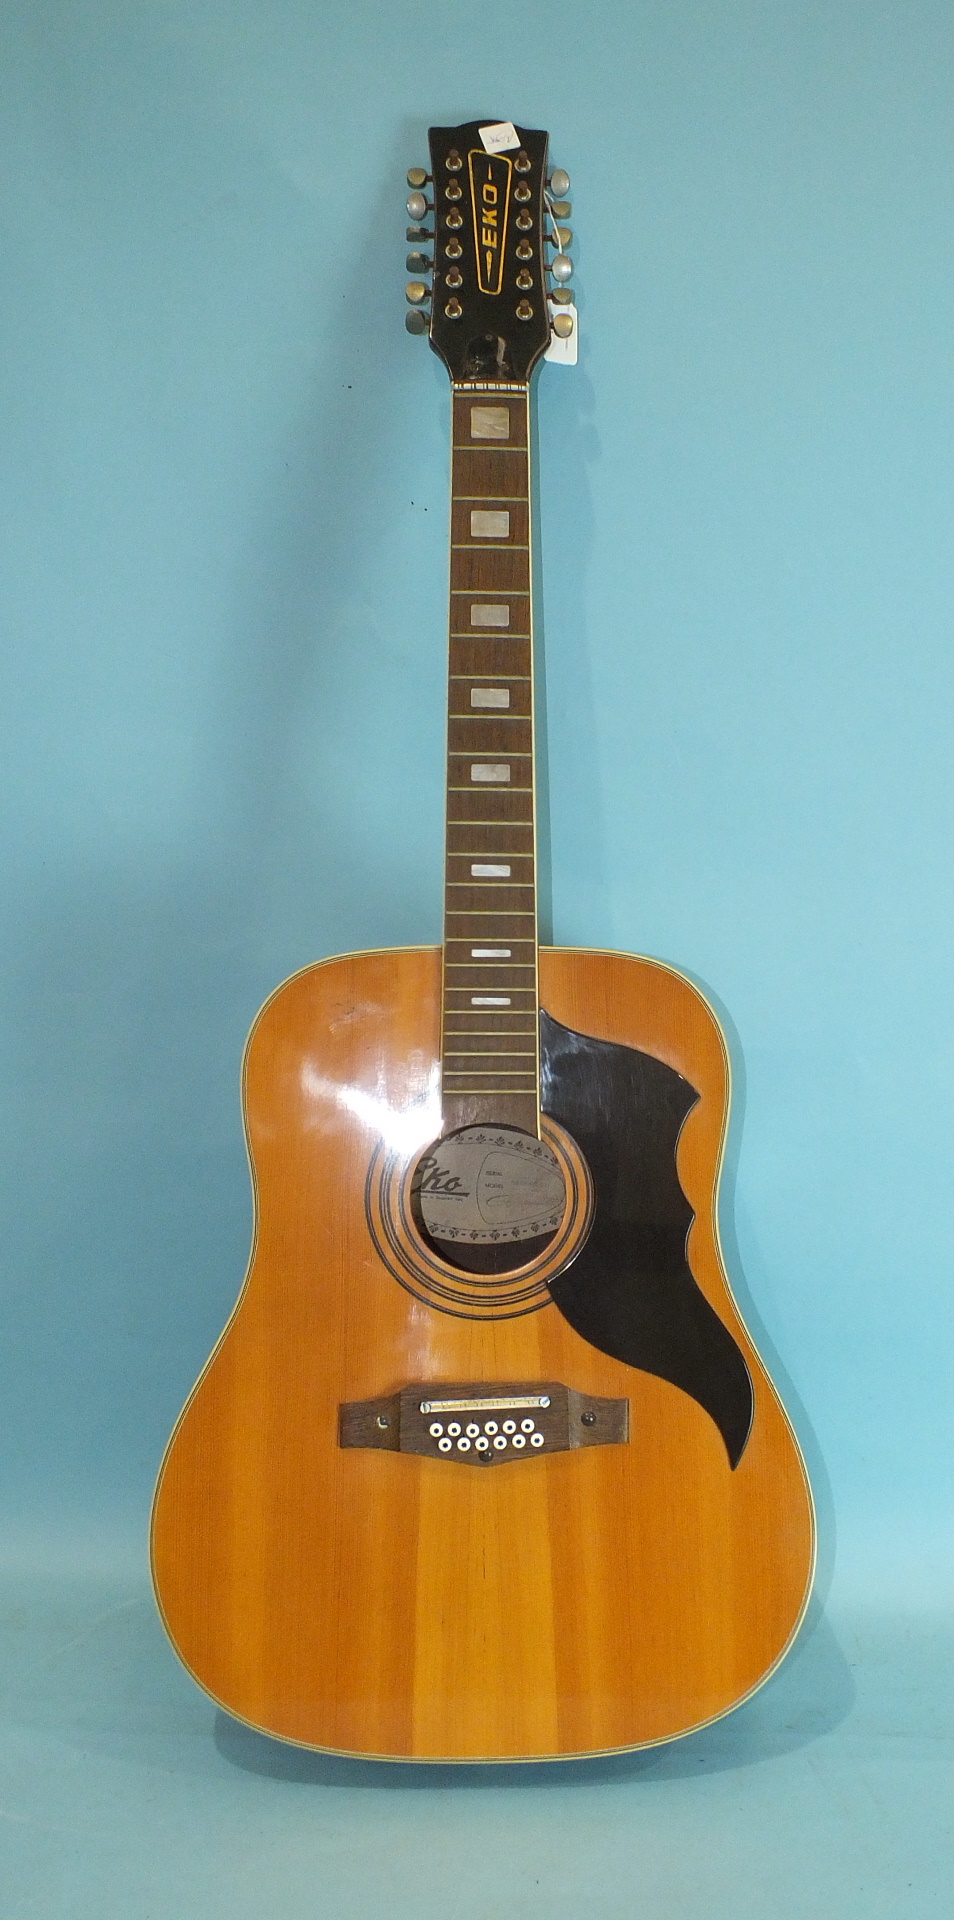 An Eko Ranger XII twelve-string acoustic guitar, (no strings).